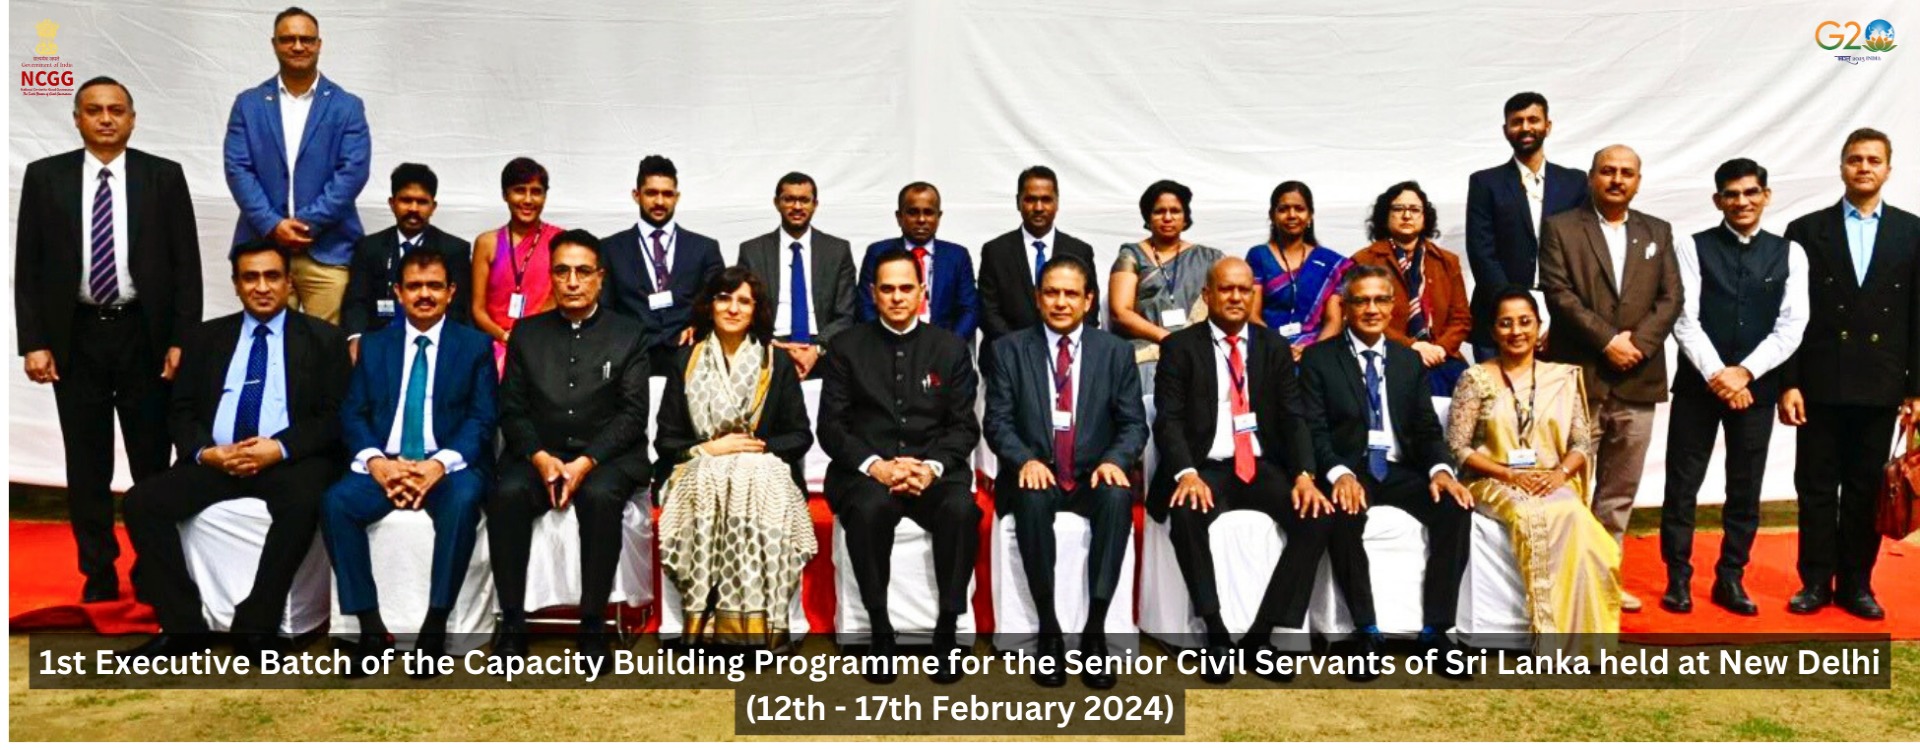 1st Executive Batch of the Capacity Building Programme for the Senior Civil Servants of Sri Lanka